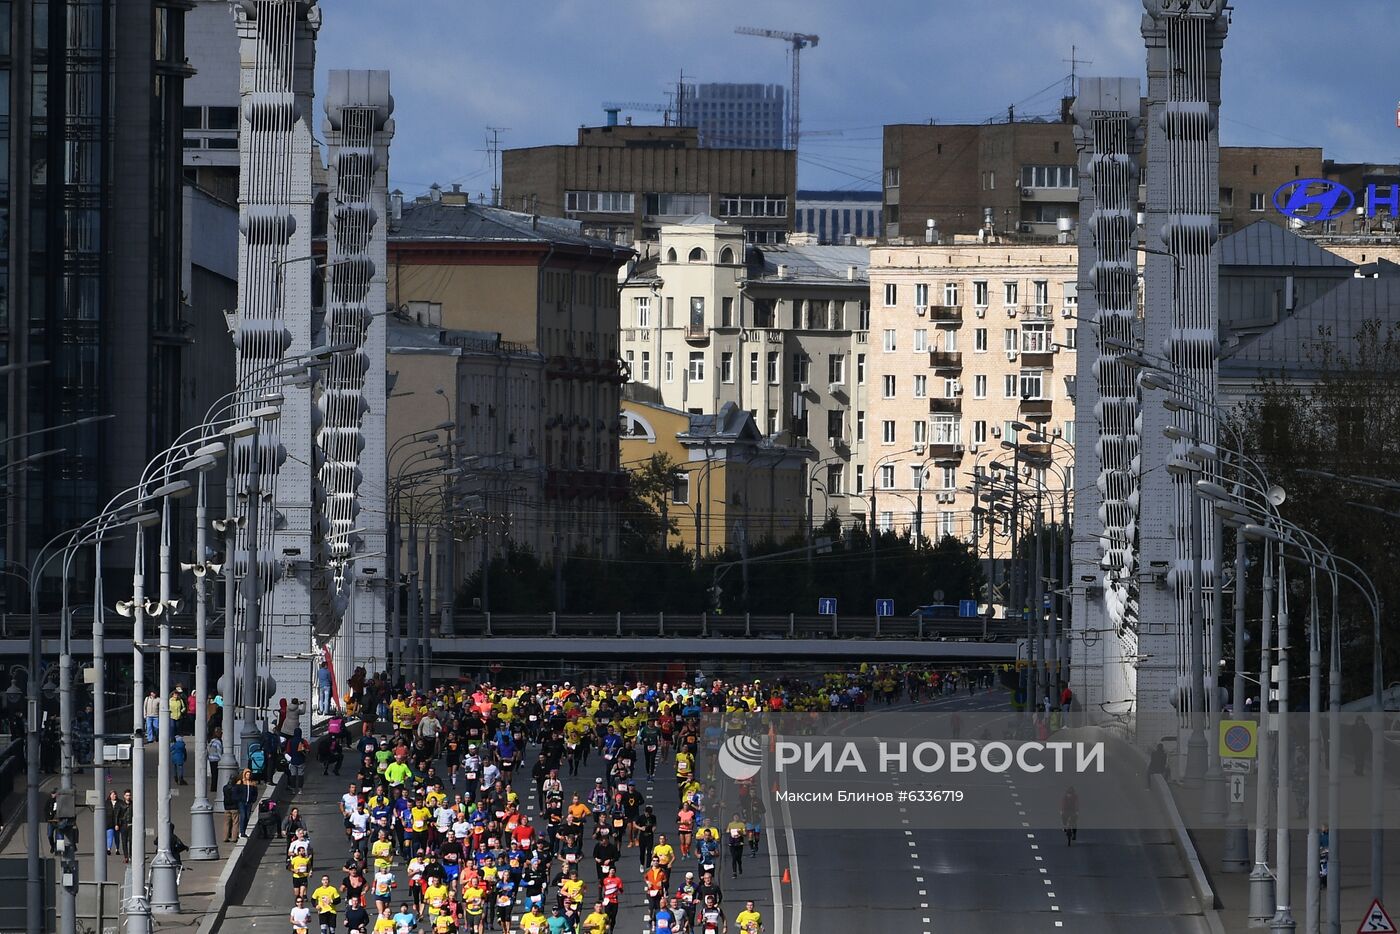 Московский марафон — 2020